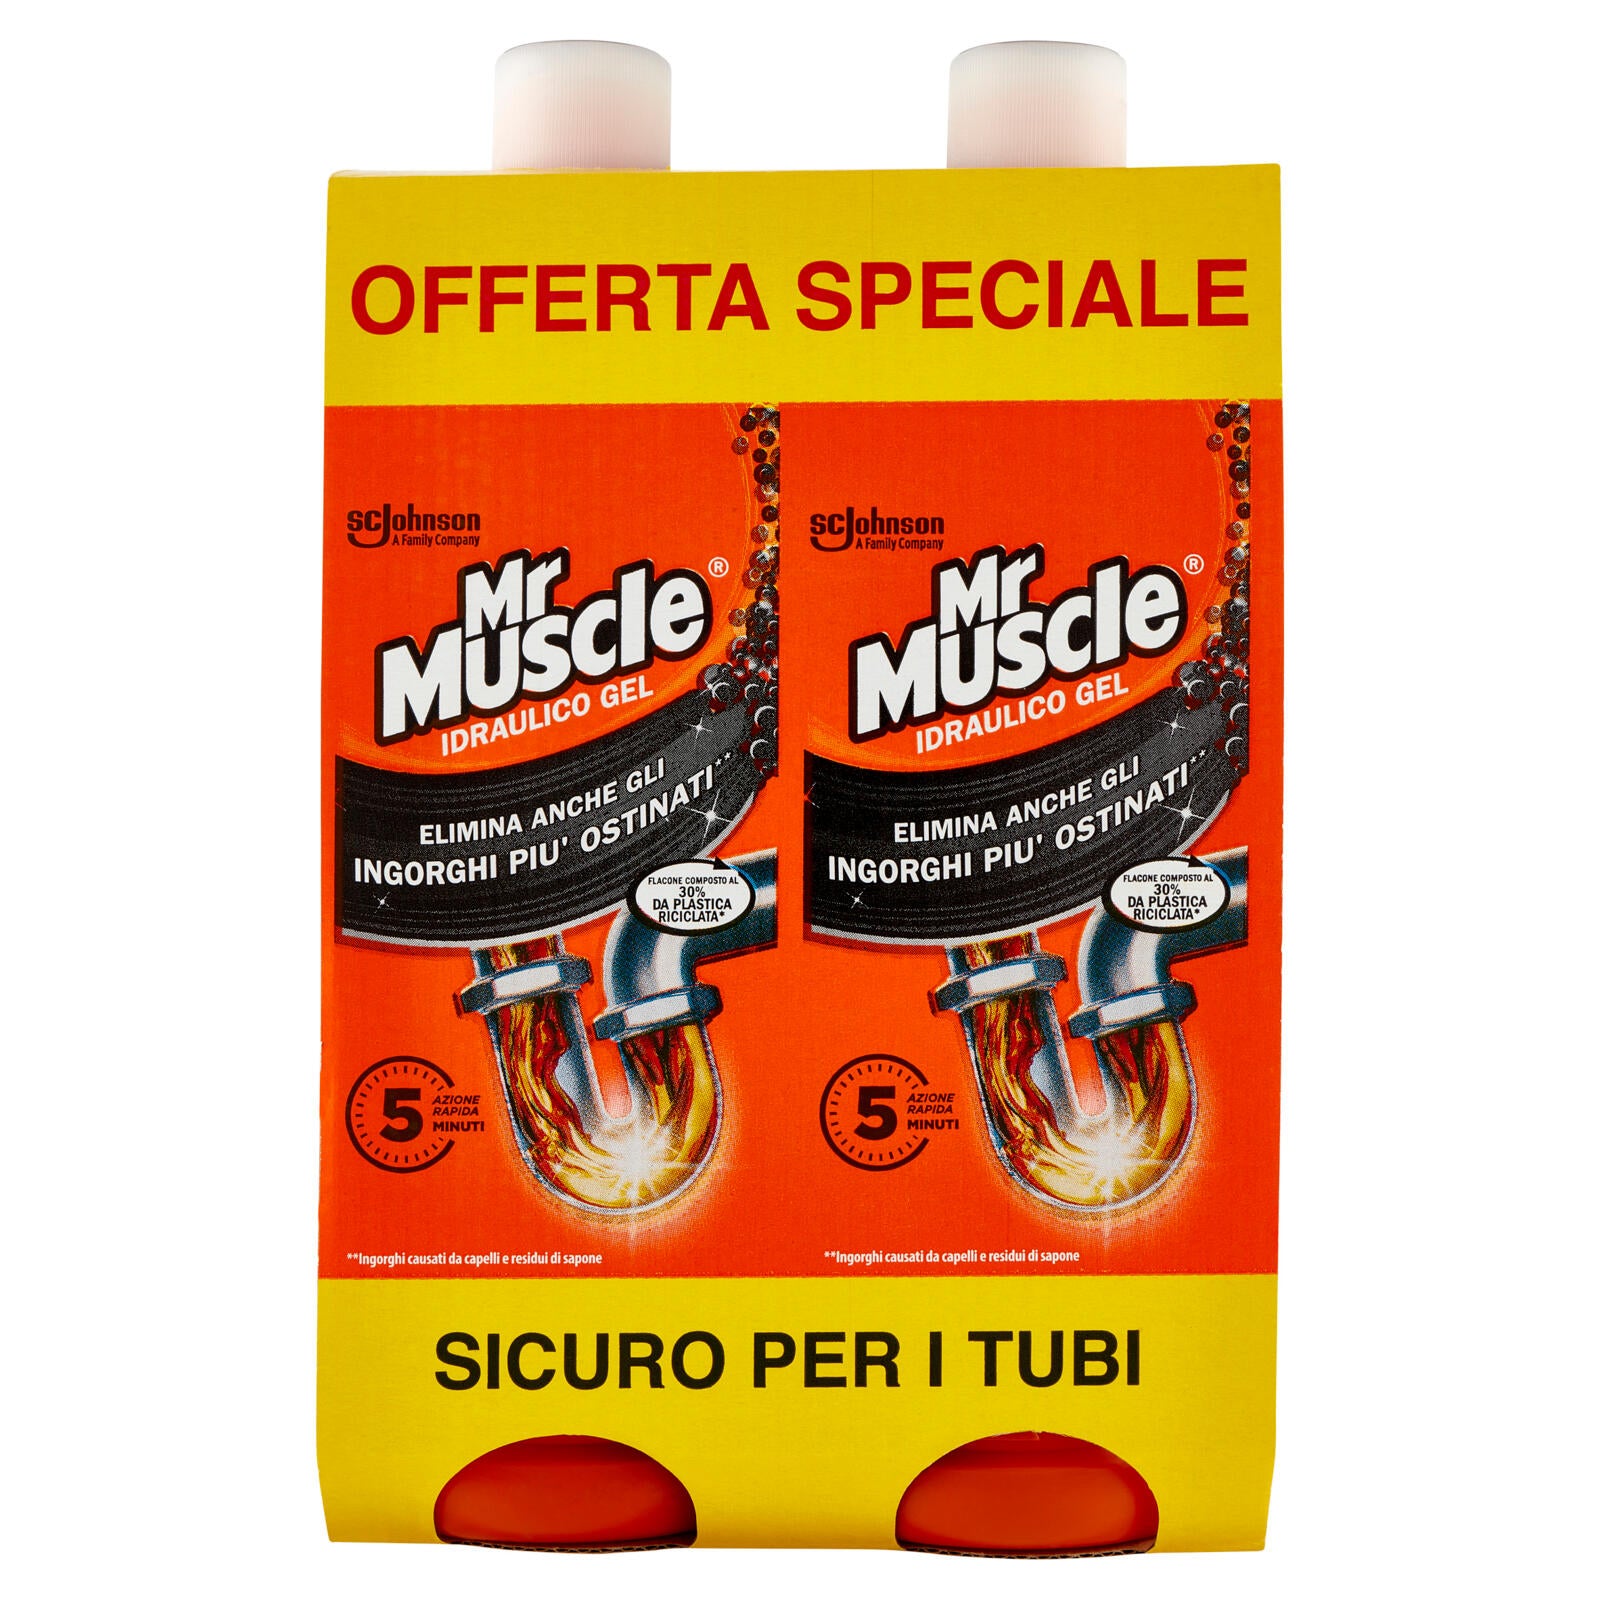 Mr muscolo idraulico gel offerta di PENNY